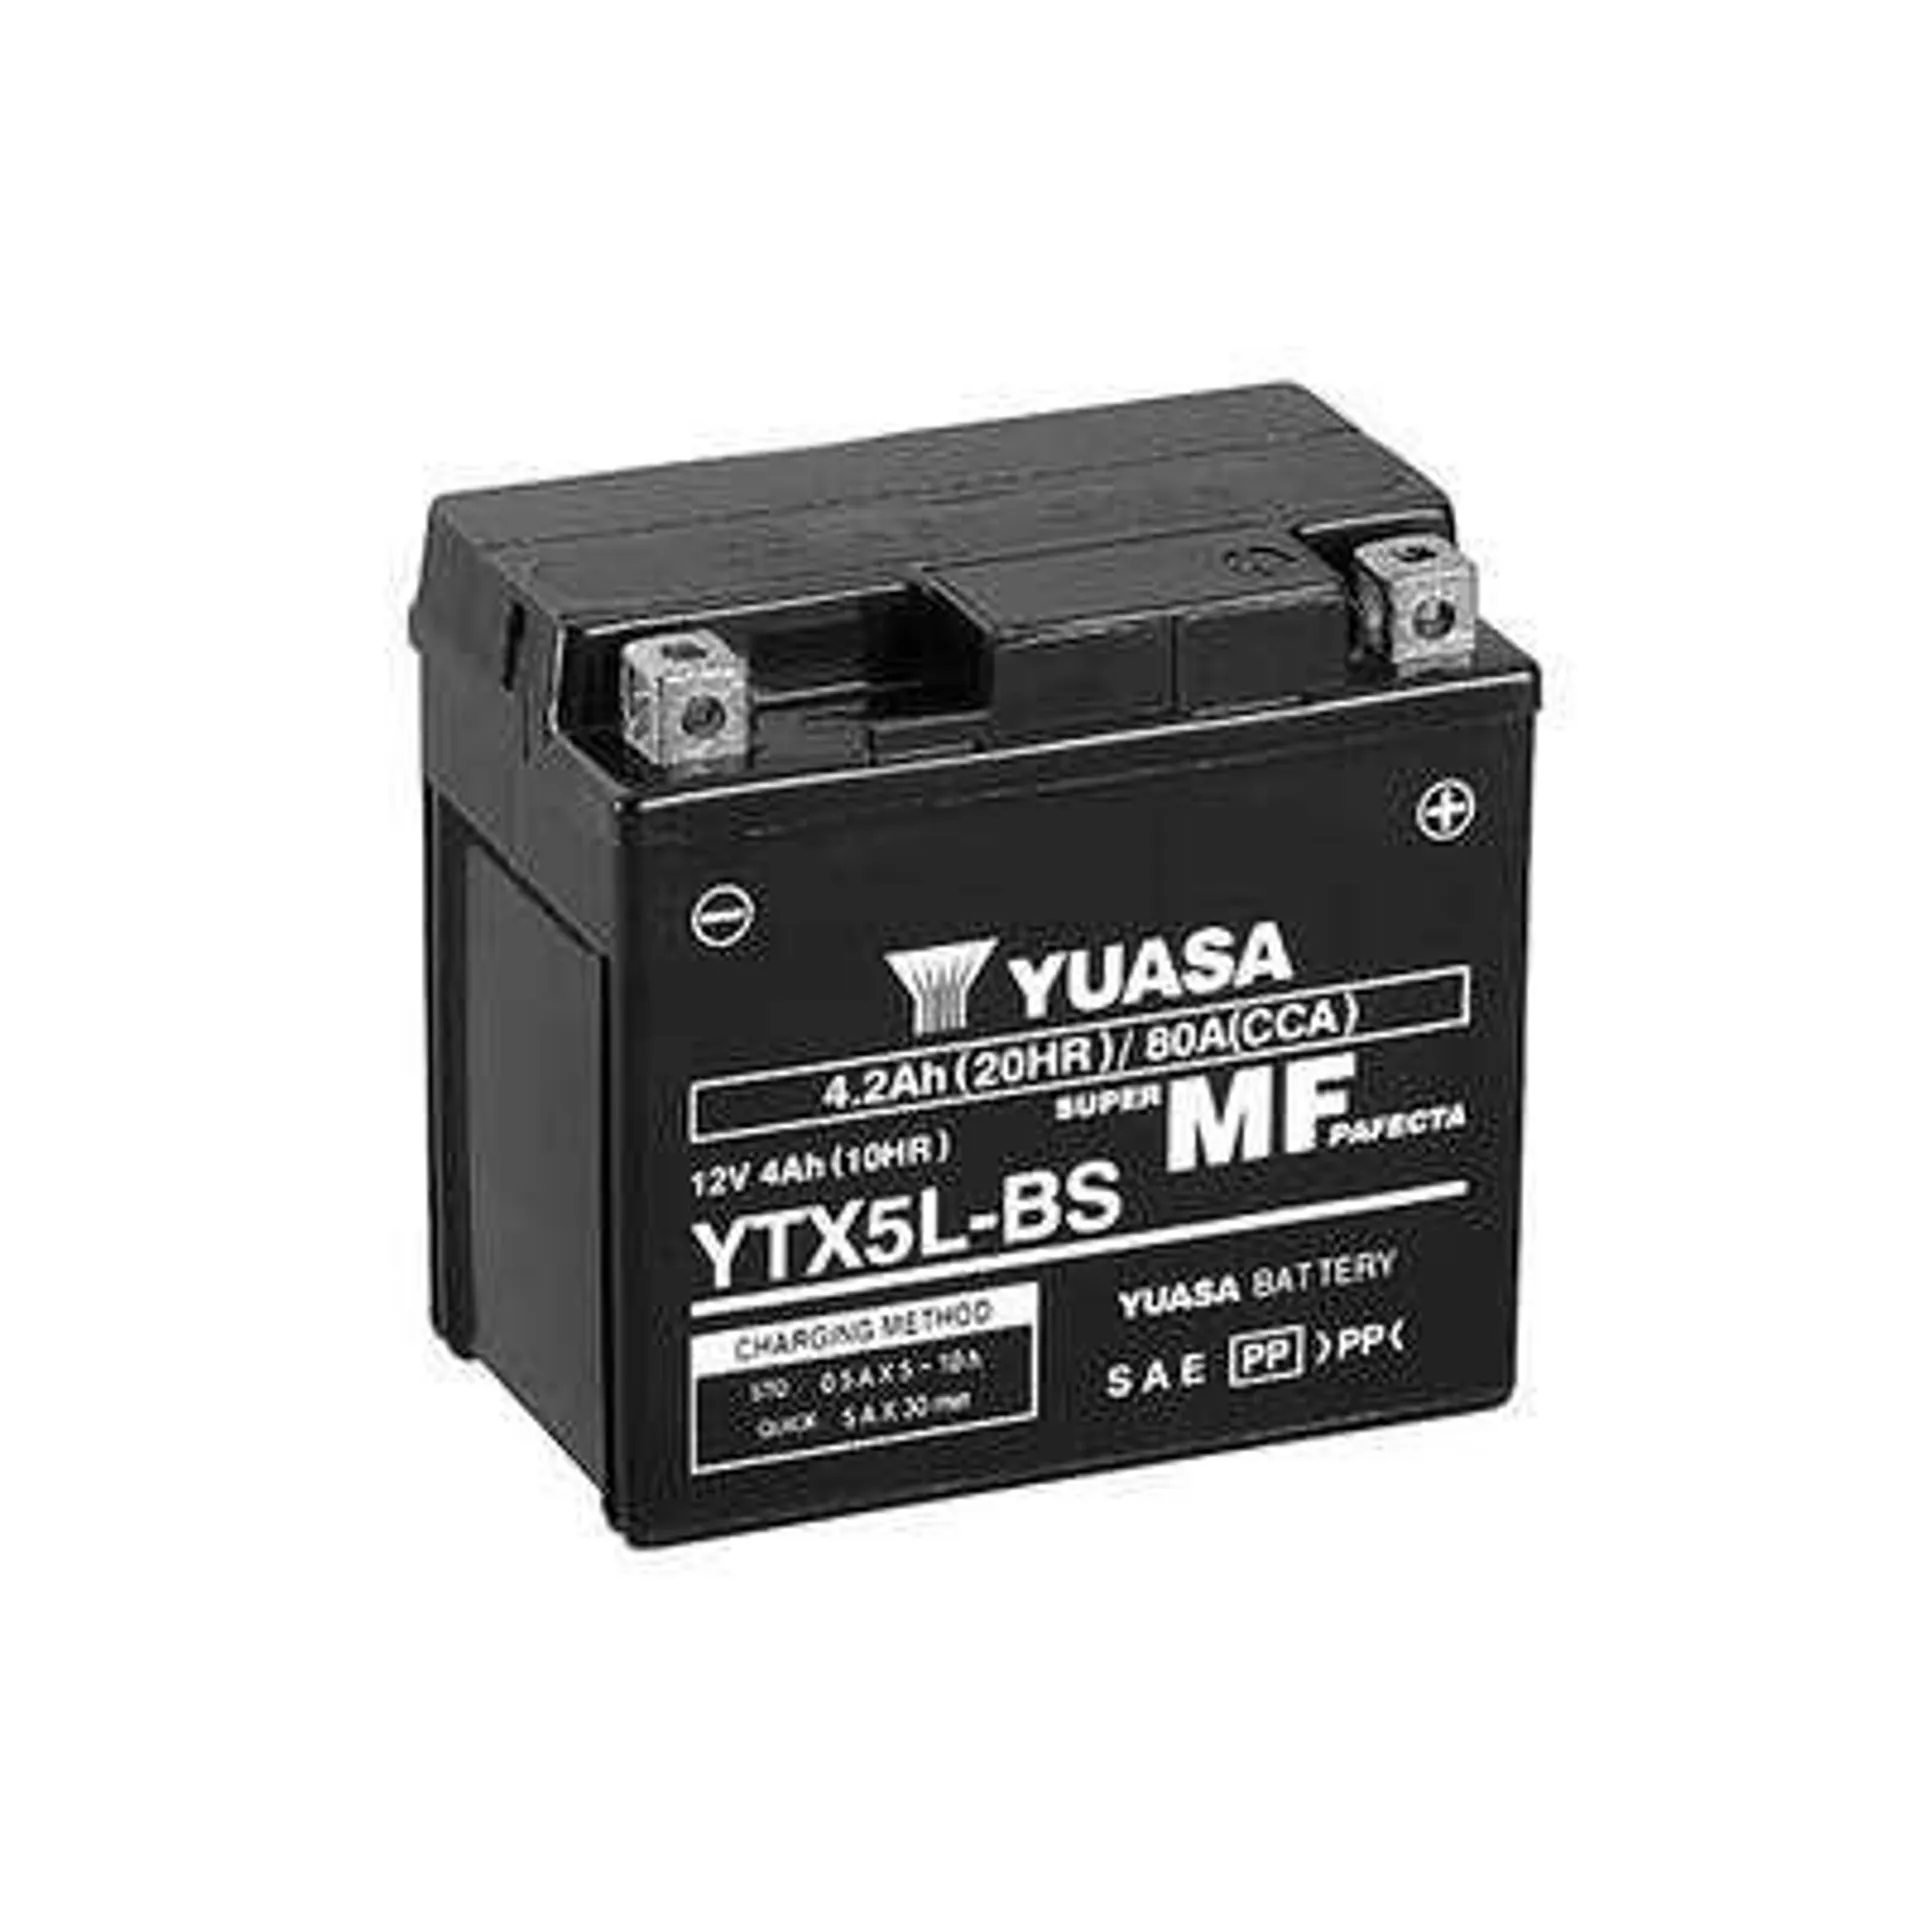 YTX5L-BSY Yuasa Motorcycle Battery